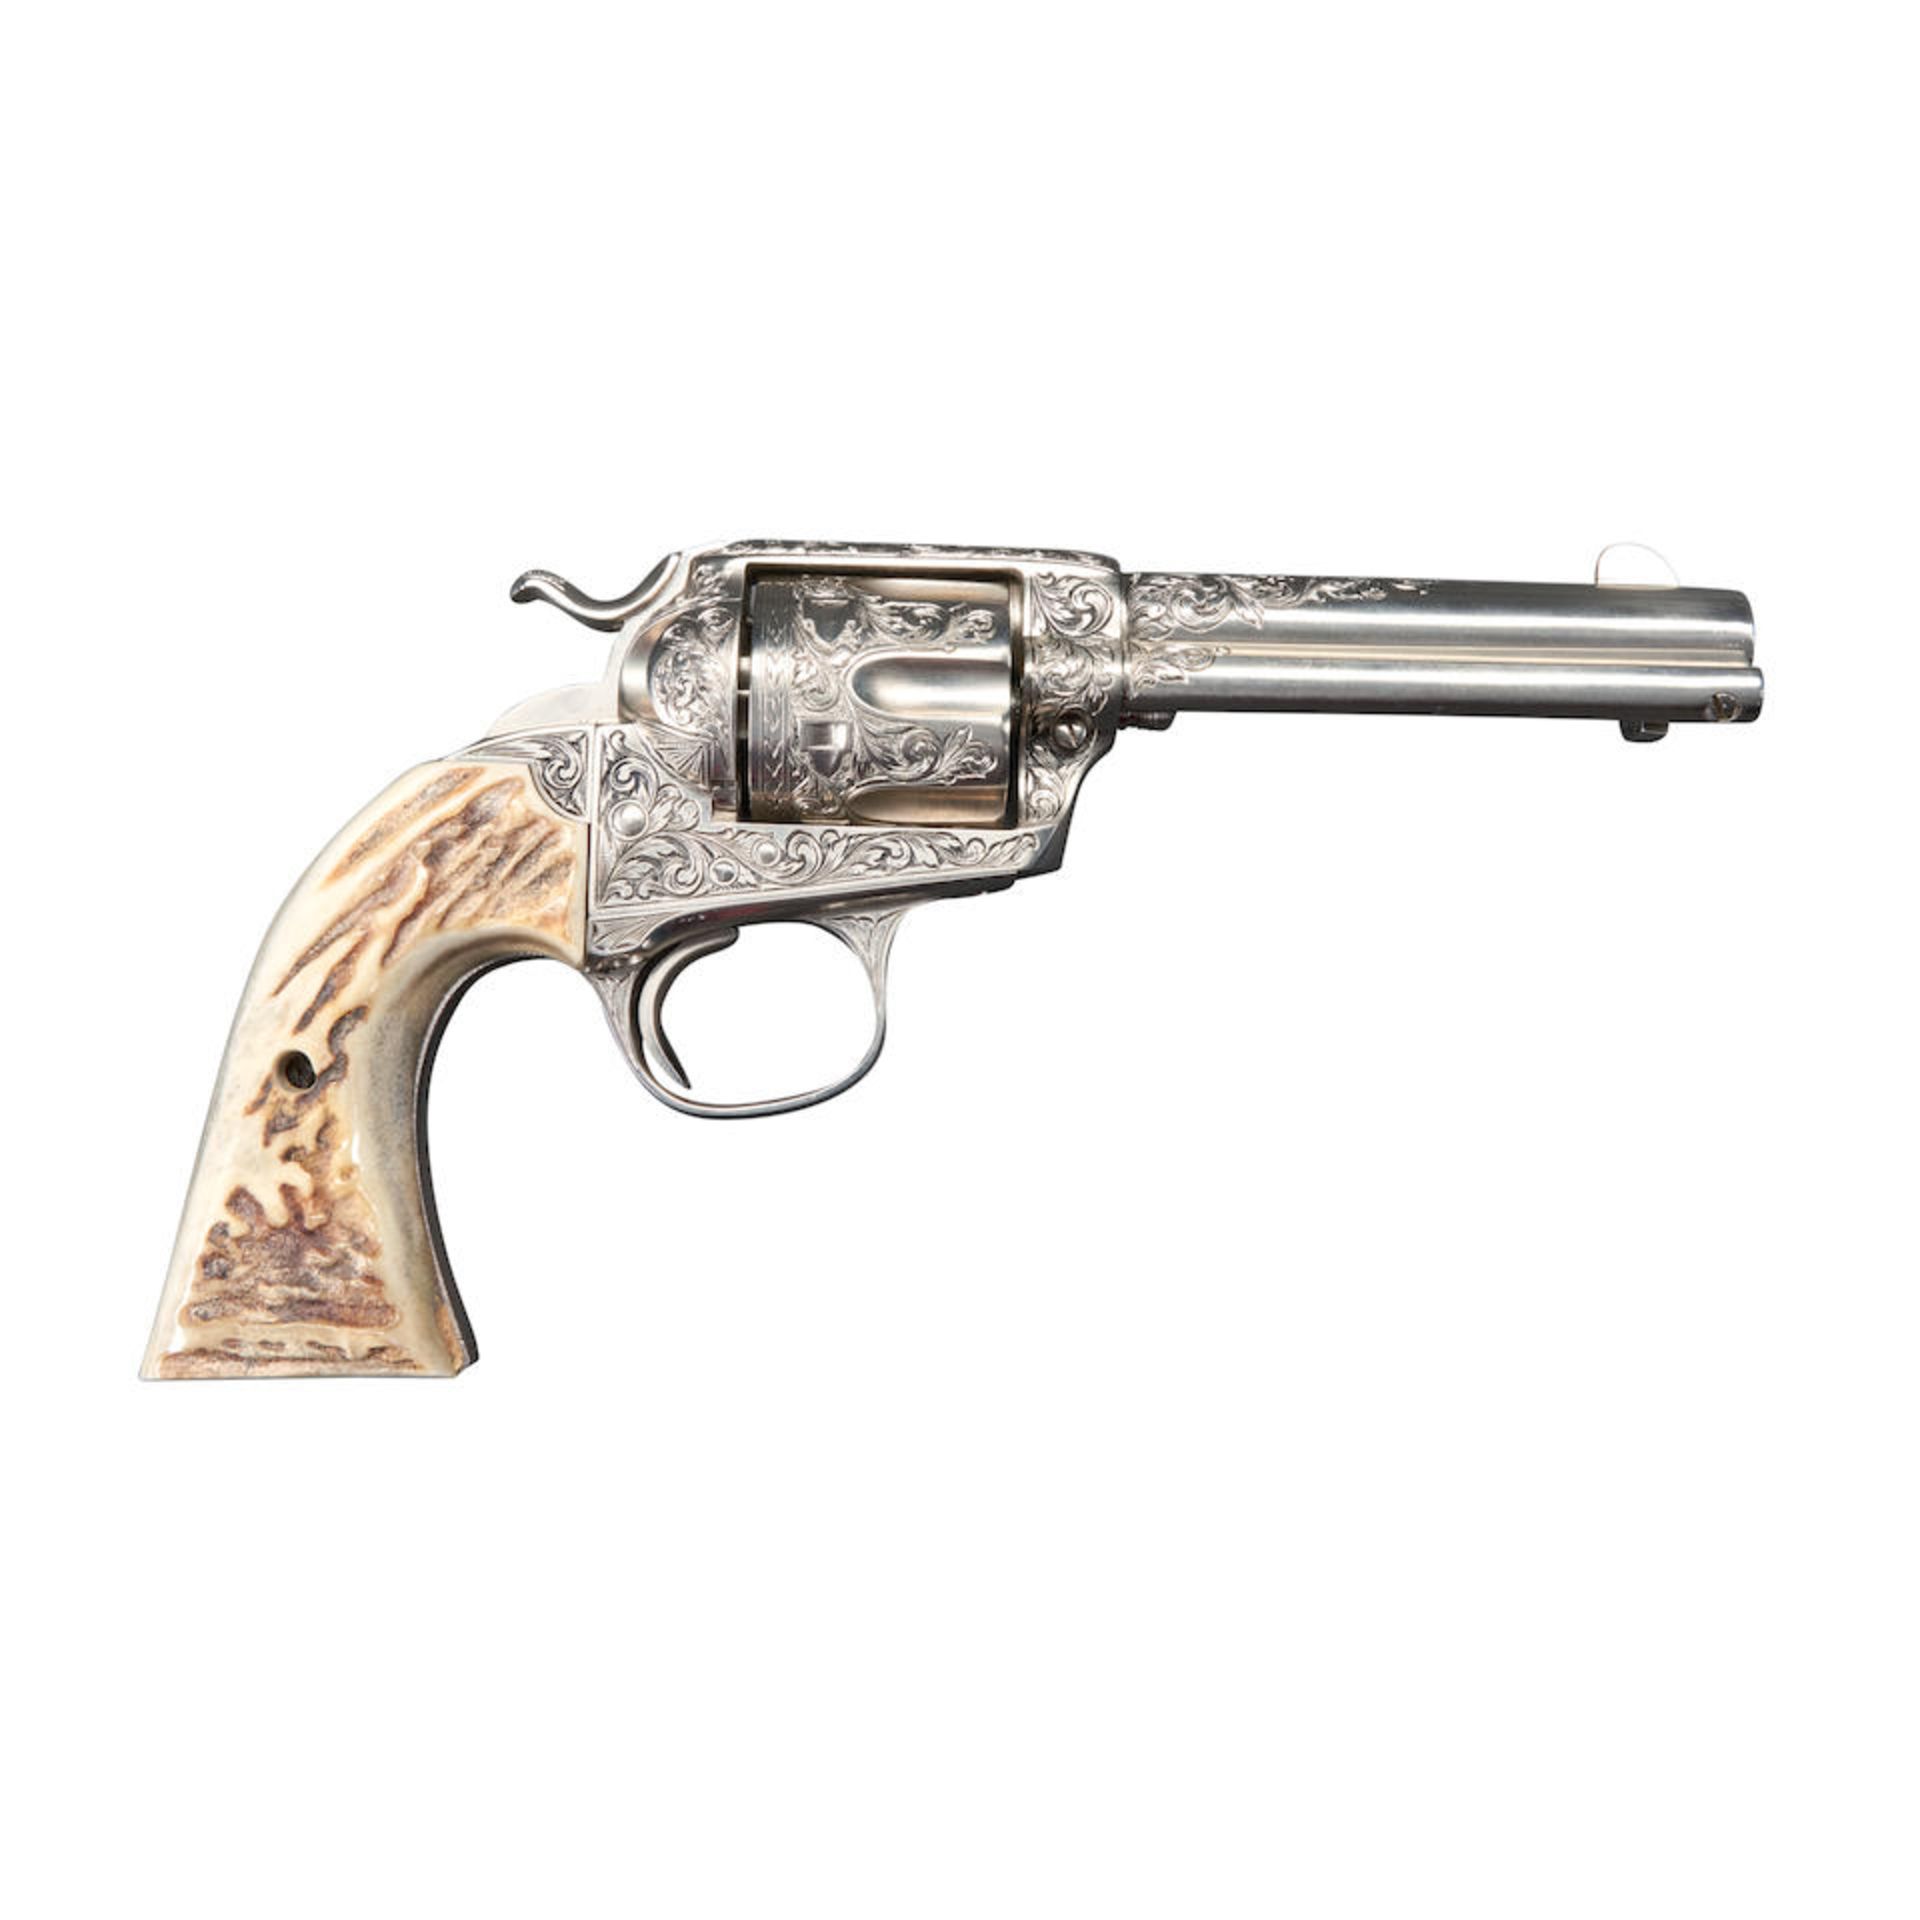 Ben Shostle Engraved Colt Bisley Single Action Revolver, Curio or Relic firearm - Bild 4 aus 4